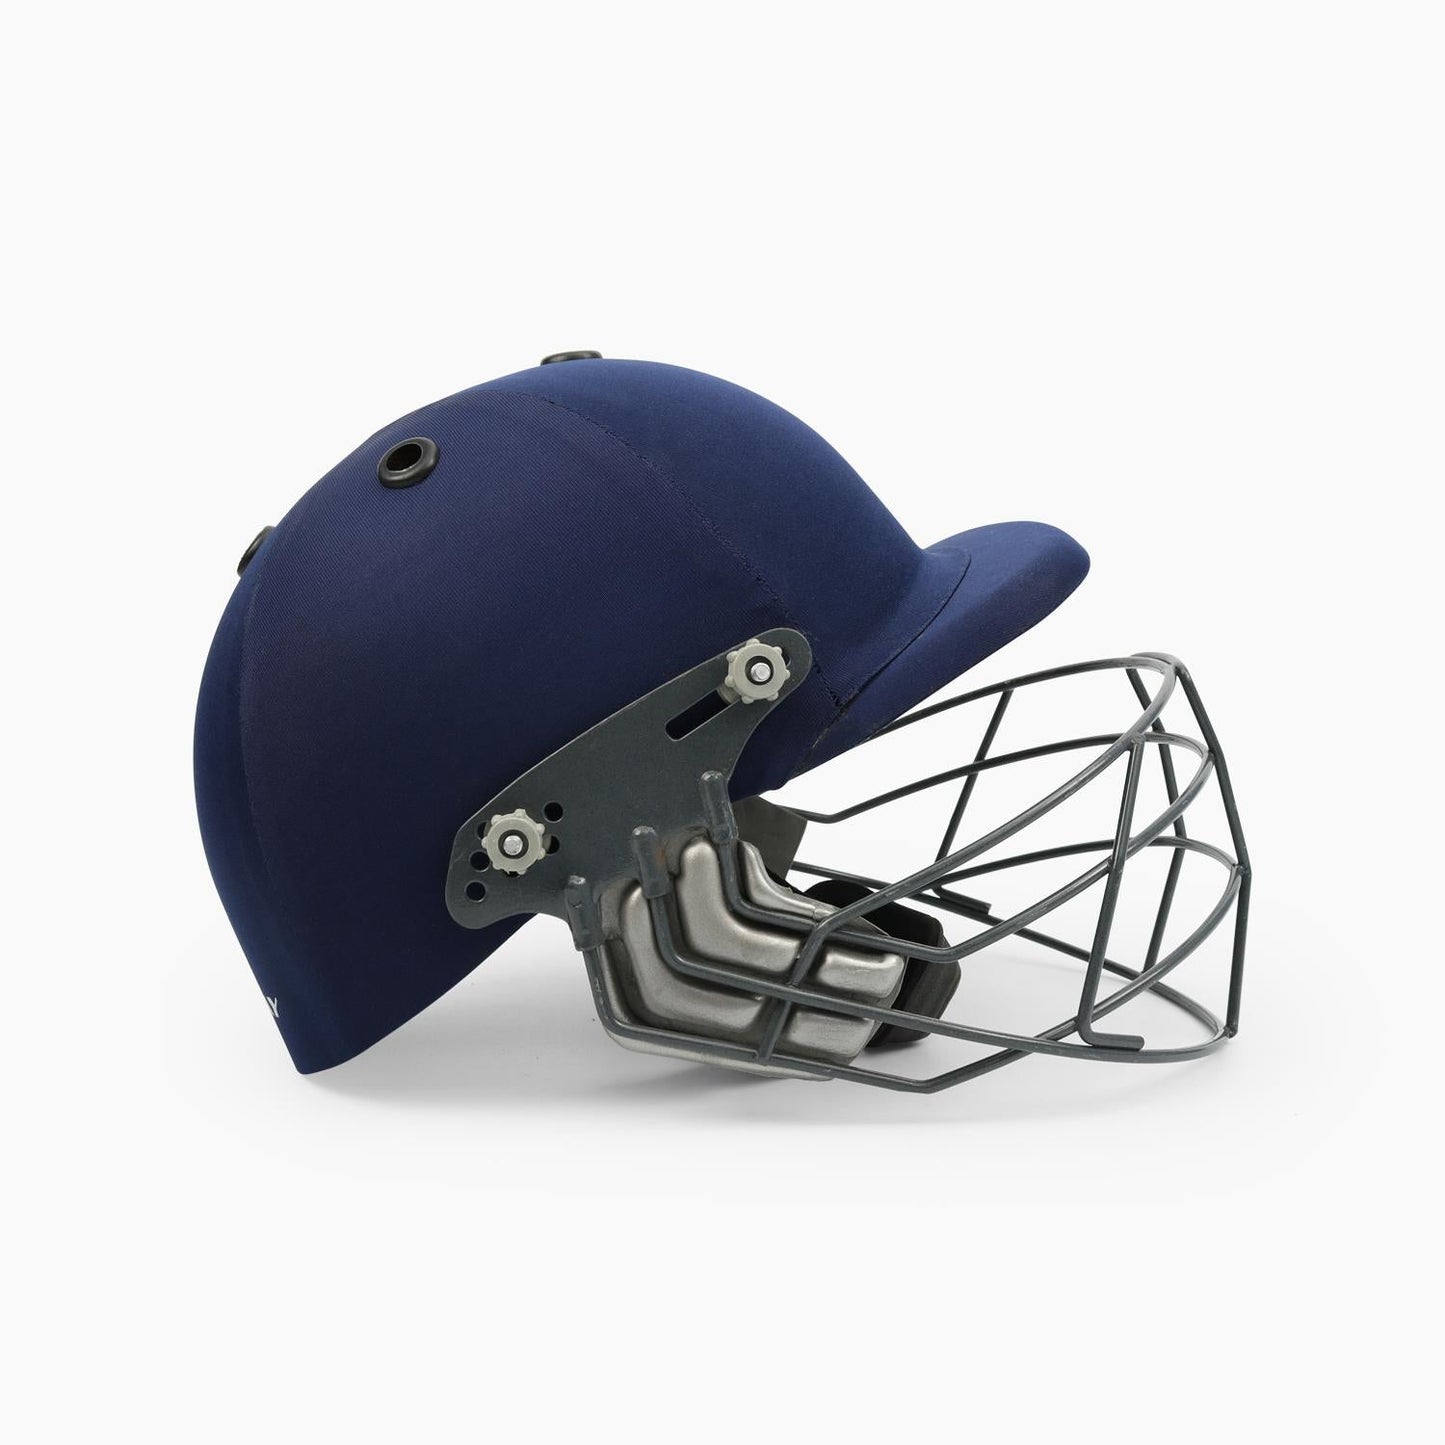 Buy Splay Champ Helmet-Cricket Helmet-Splay-Splay UK Online